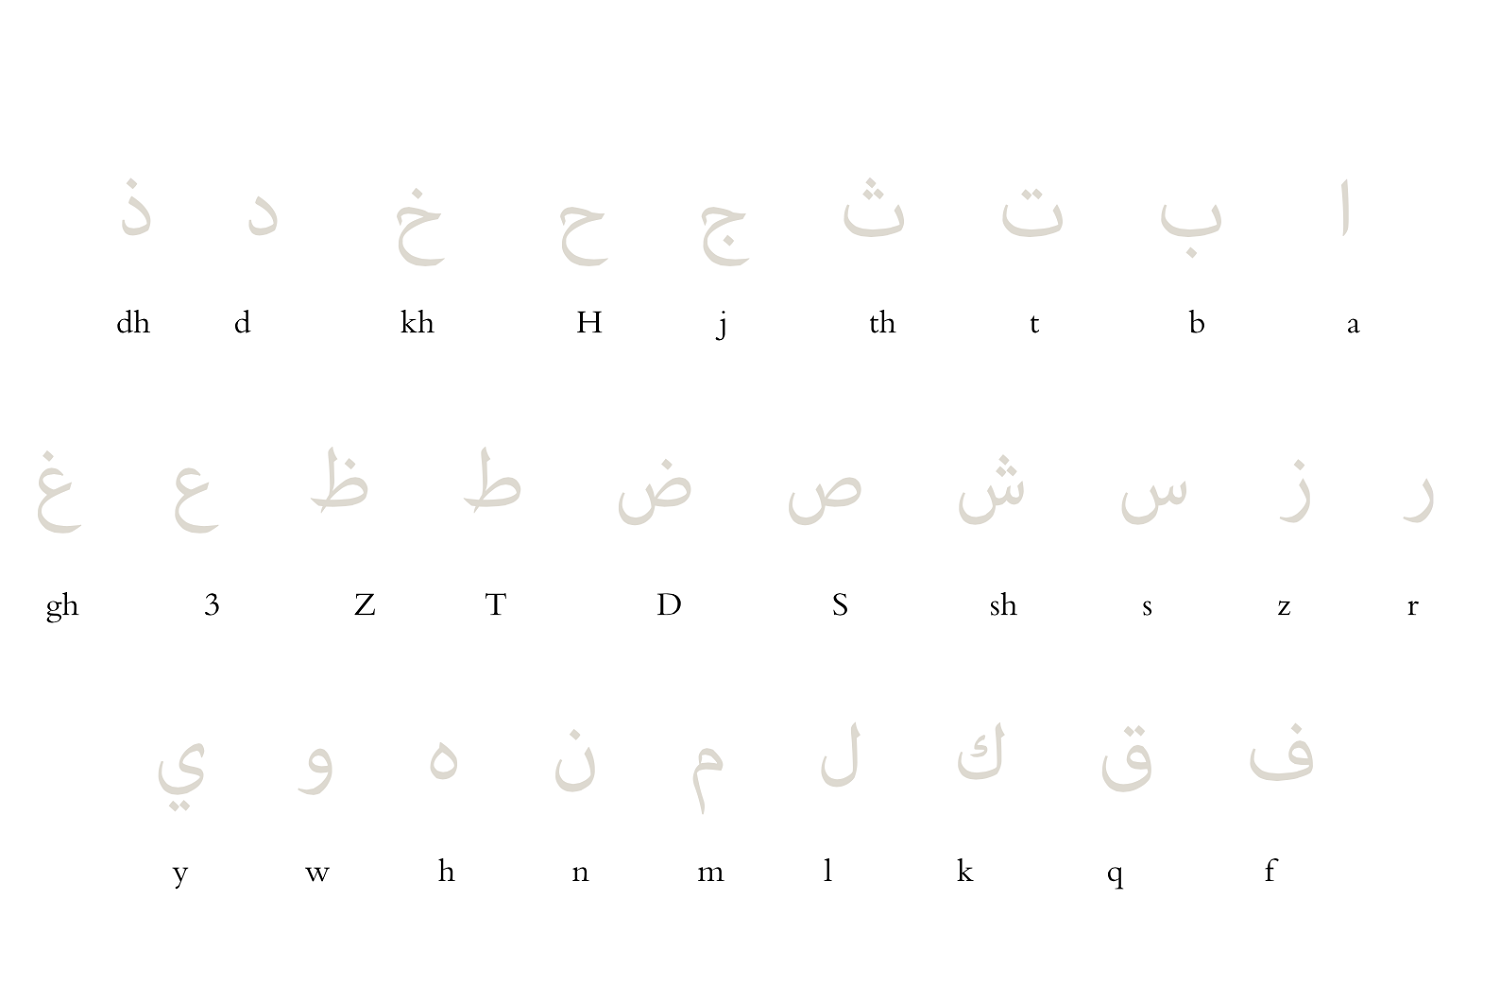 alif-to-yaa-arabic-writing-practice-sheets-dotted-lines-alif-to-yaa-arabic-writing-practice